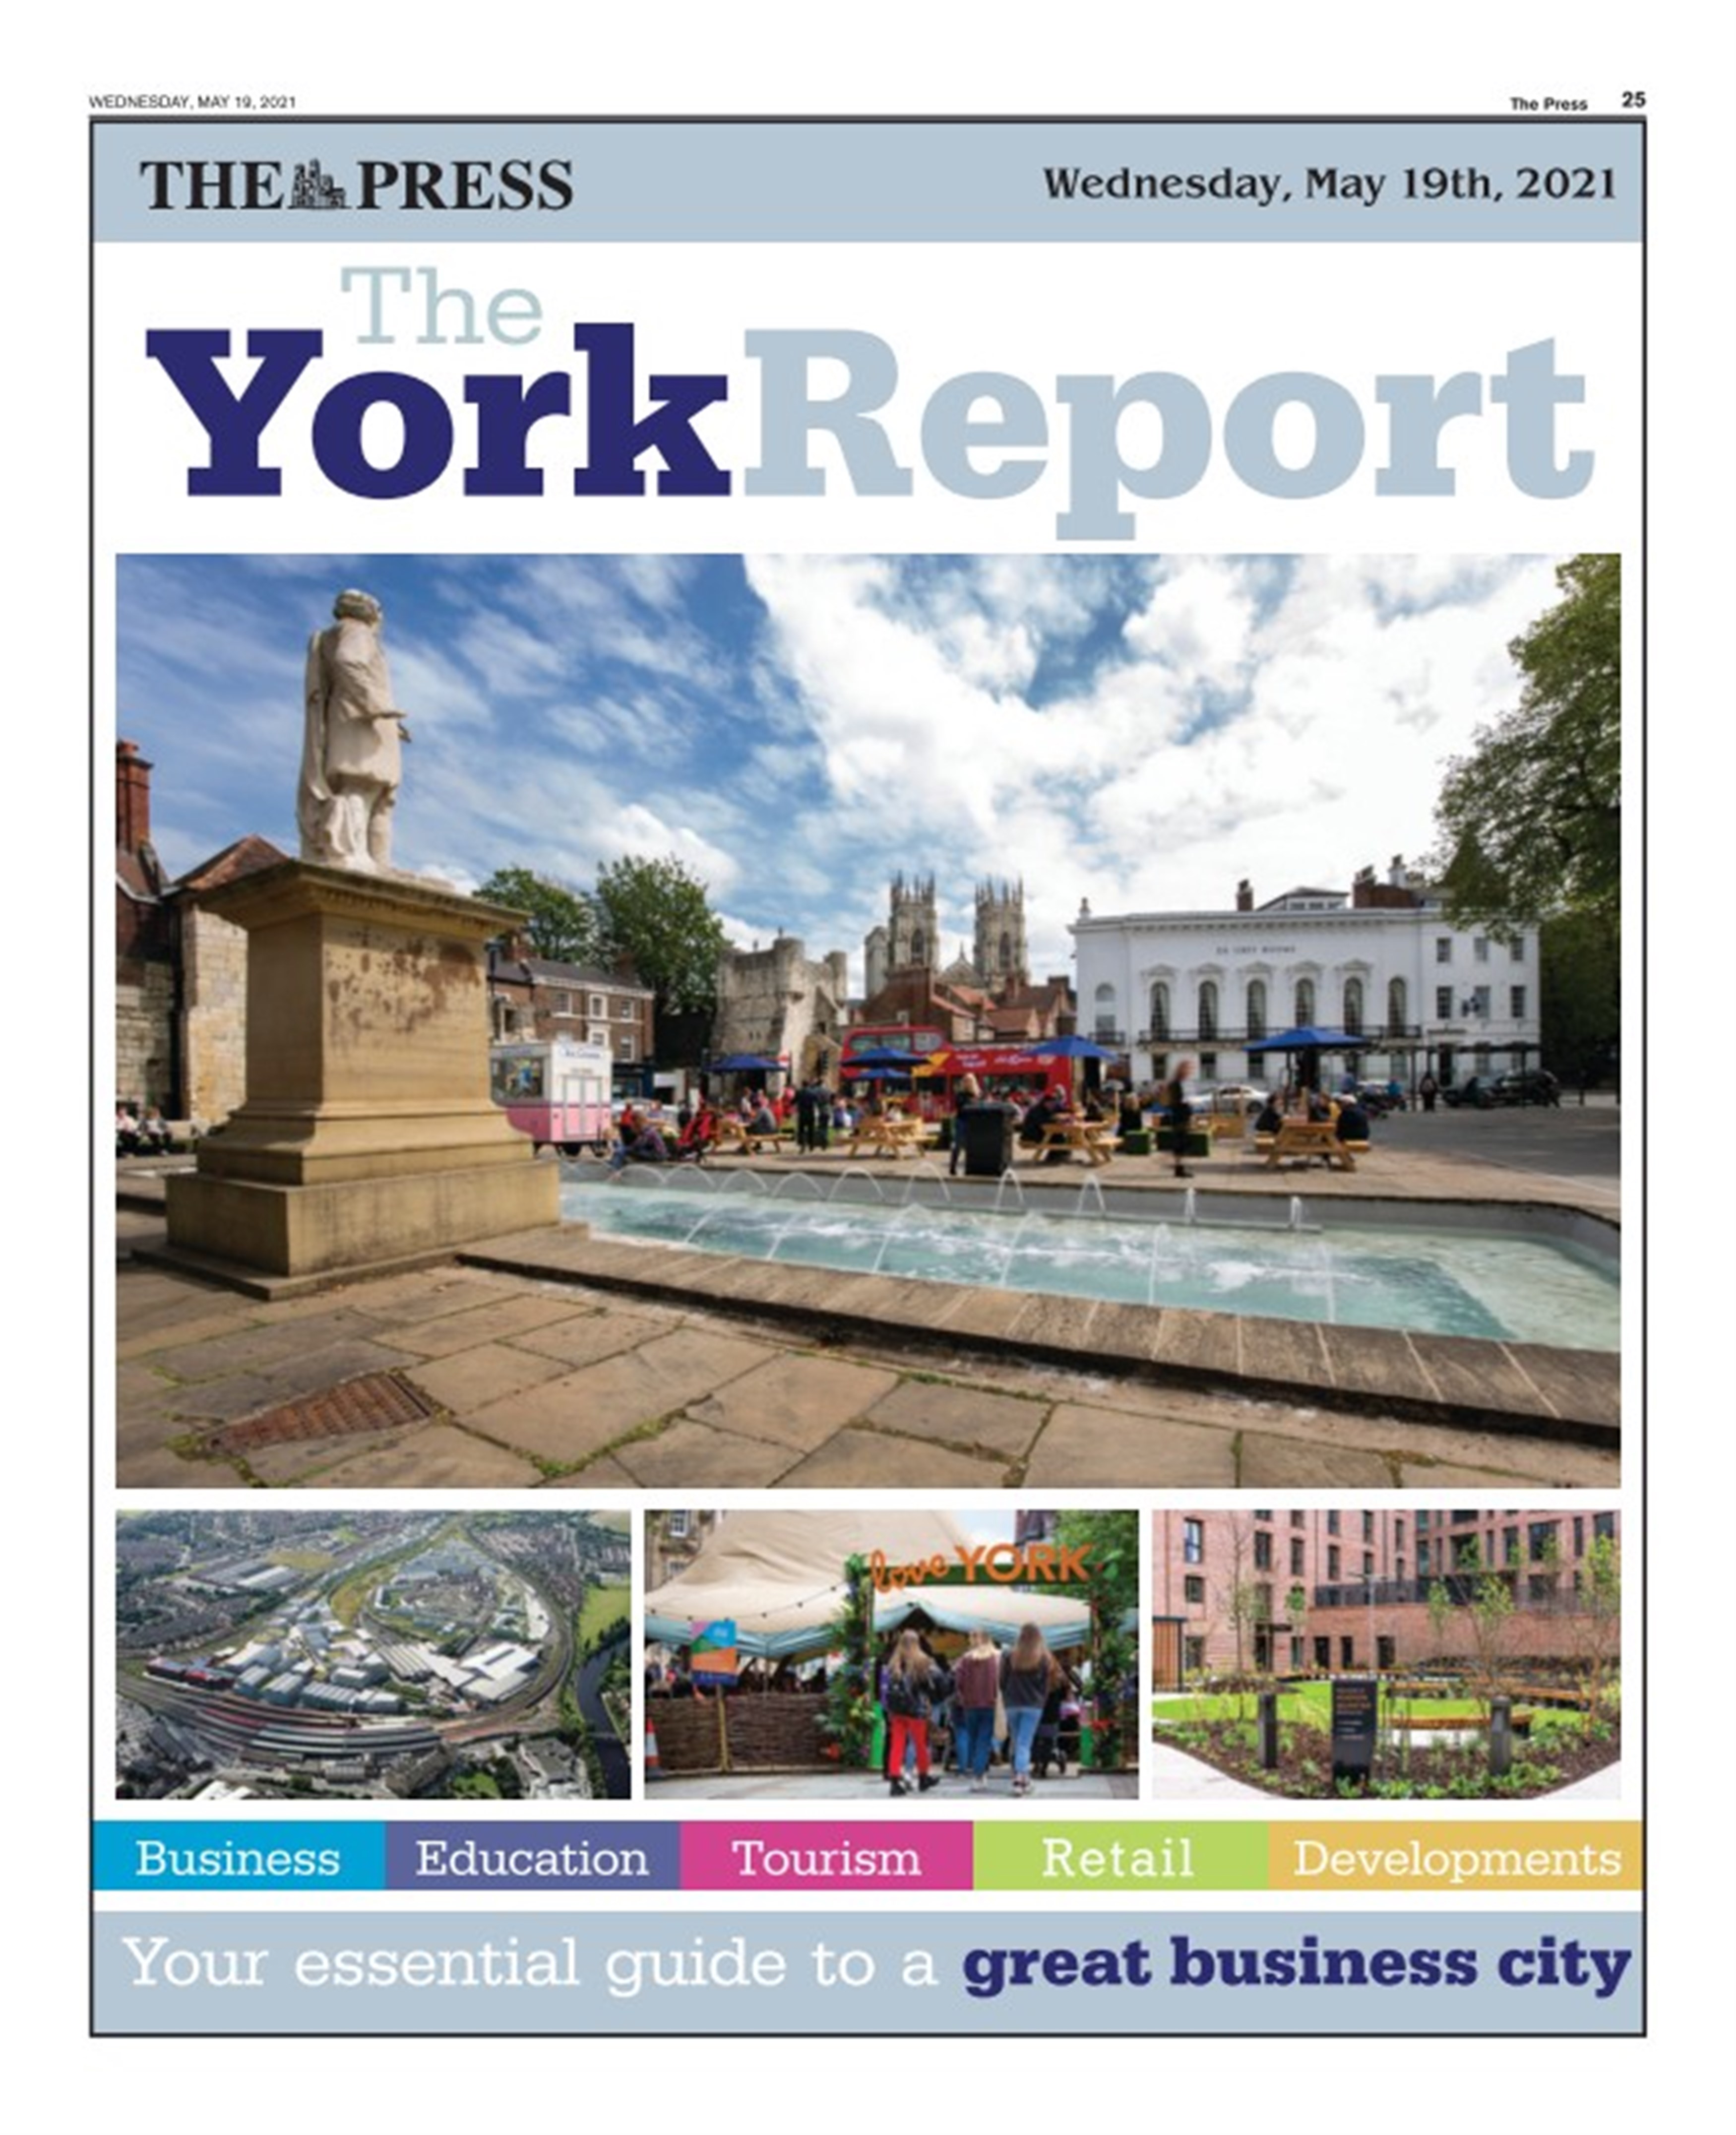 The York Report